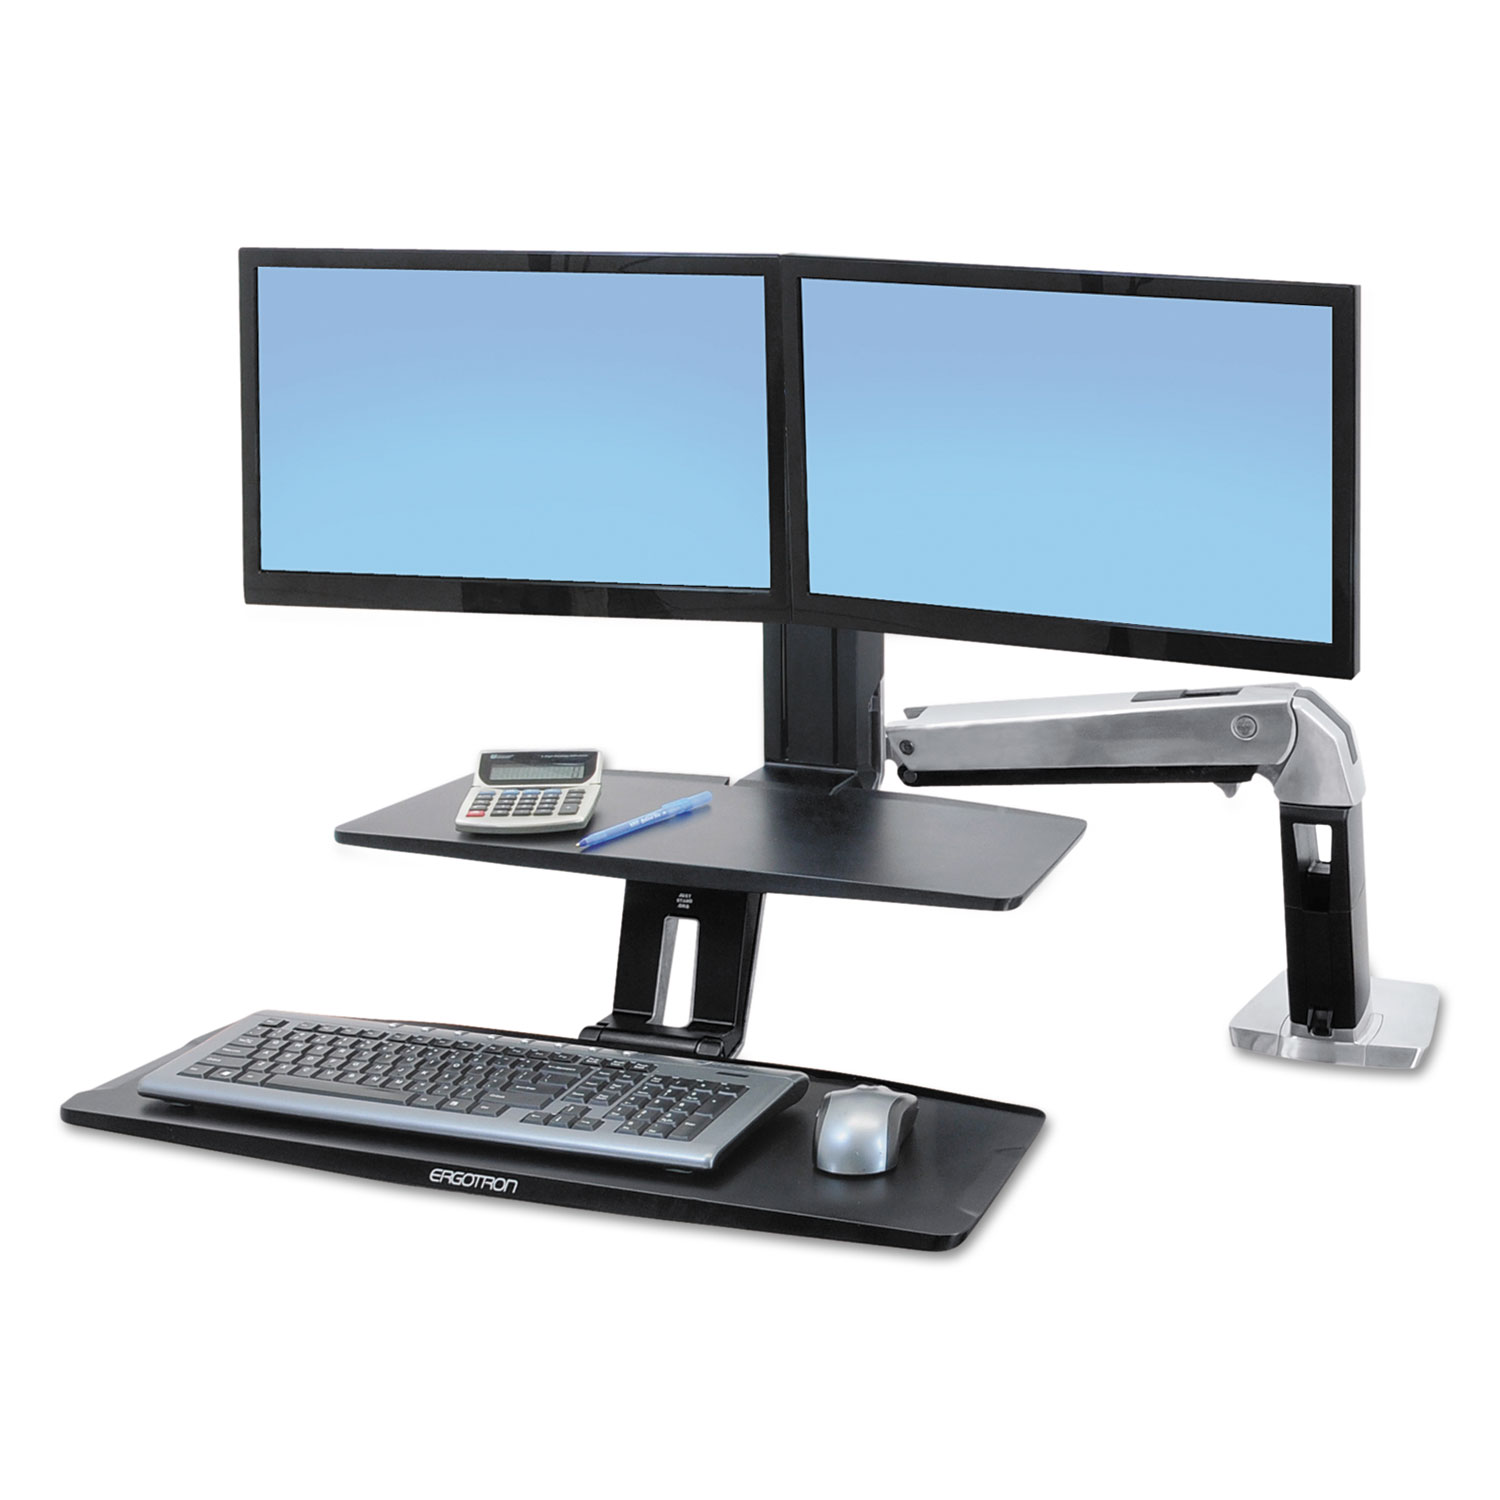 Ergotron WorkFit-A Dual Workstation With Suspended Keyboard - Standing desk converter - black, polished aluminum - image 1 of 5